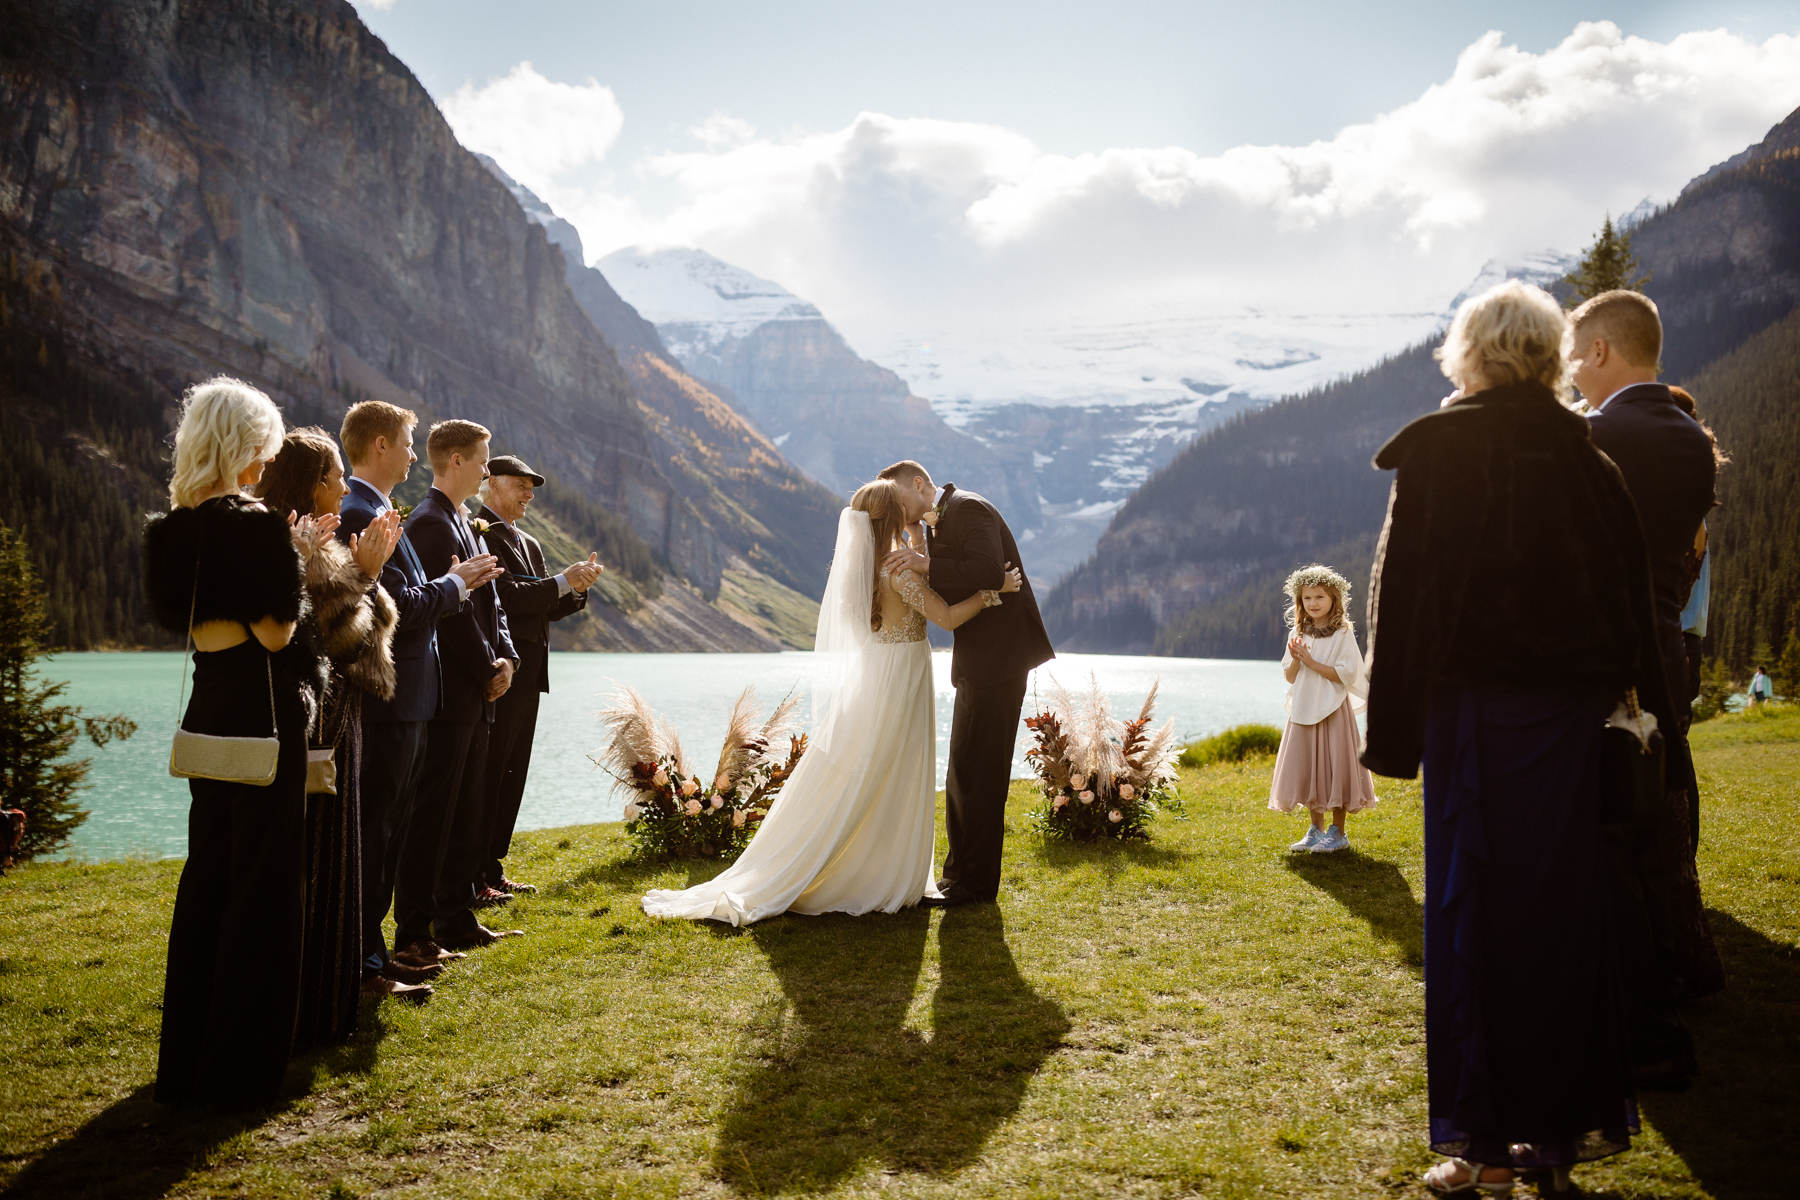 Moraine Lake wedding photos - Image 19